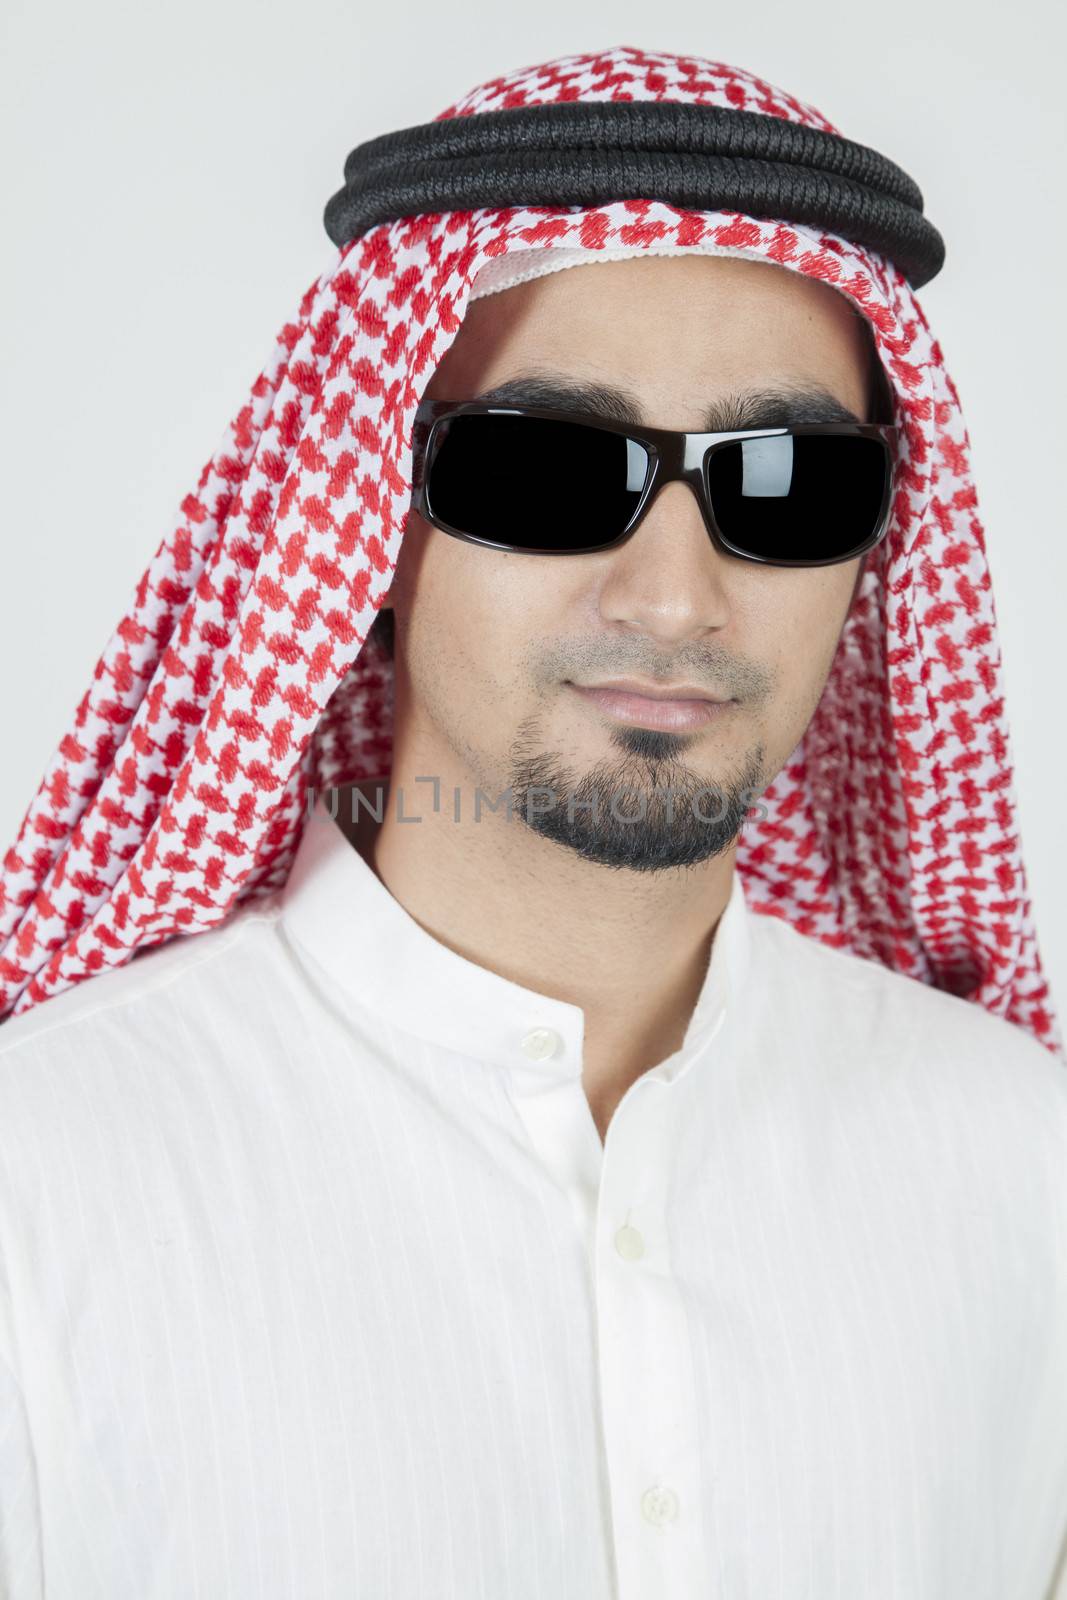 Young arab portrait wearing sun glasses